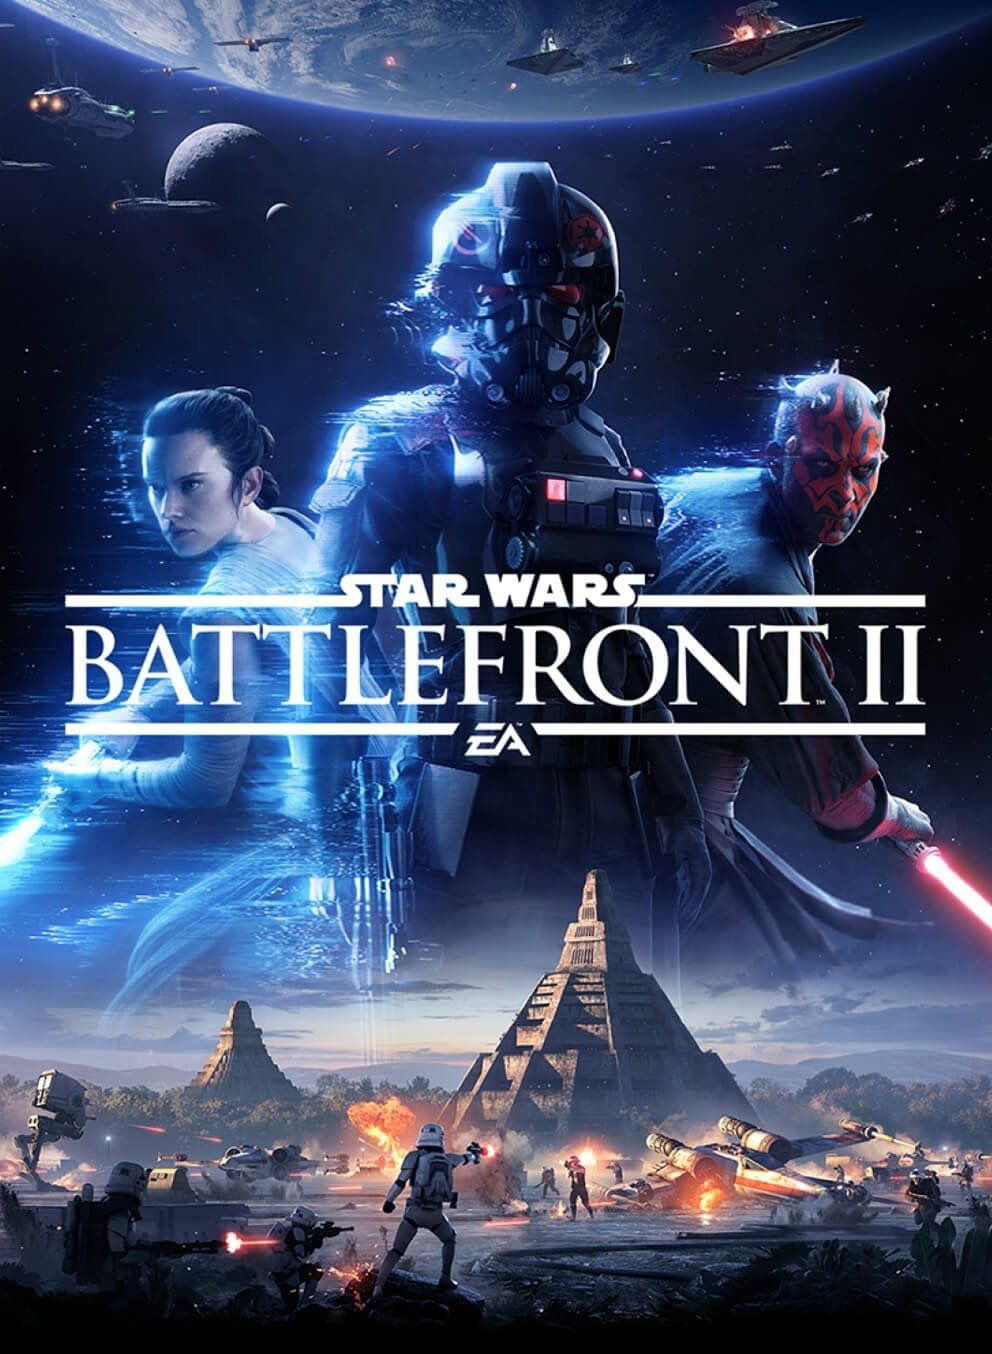 Star Wars Battlefront II Video Game Poster